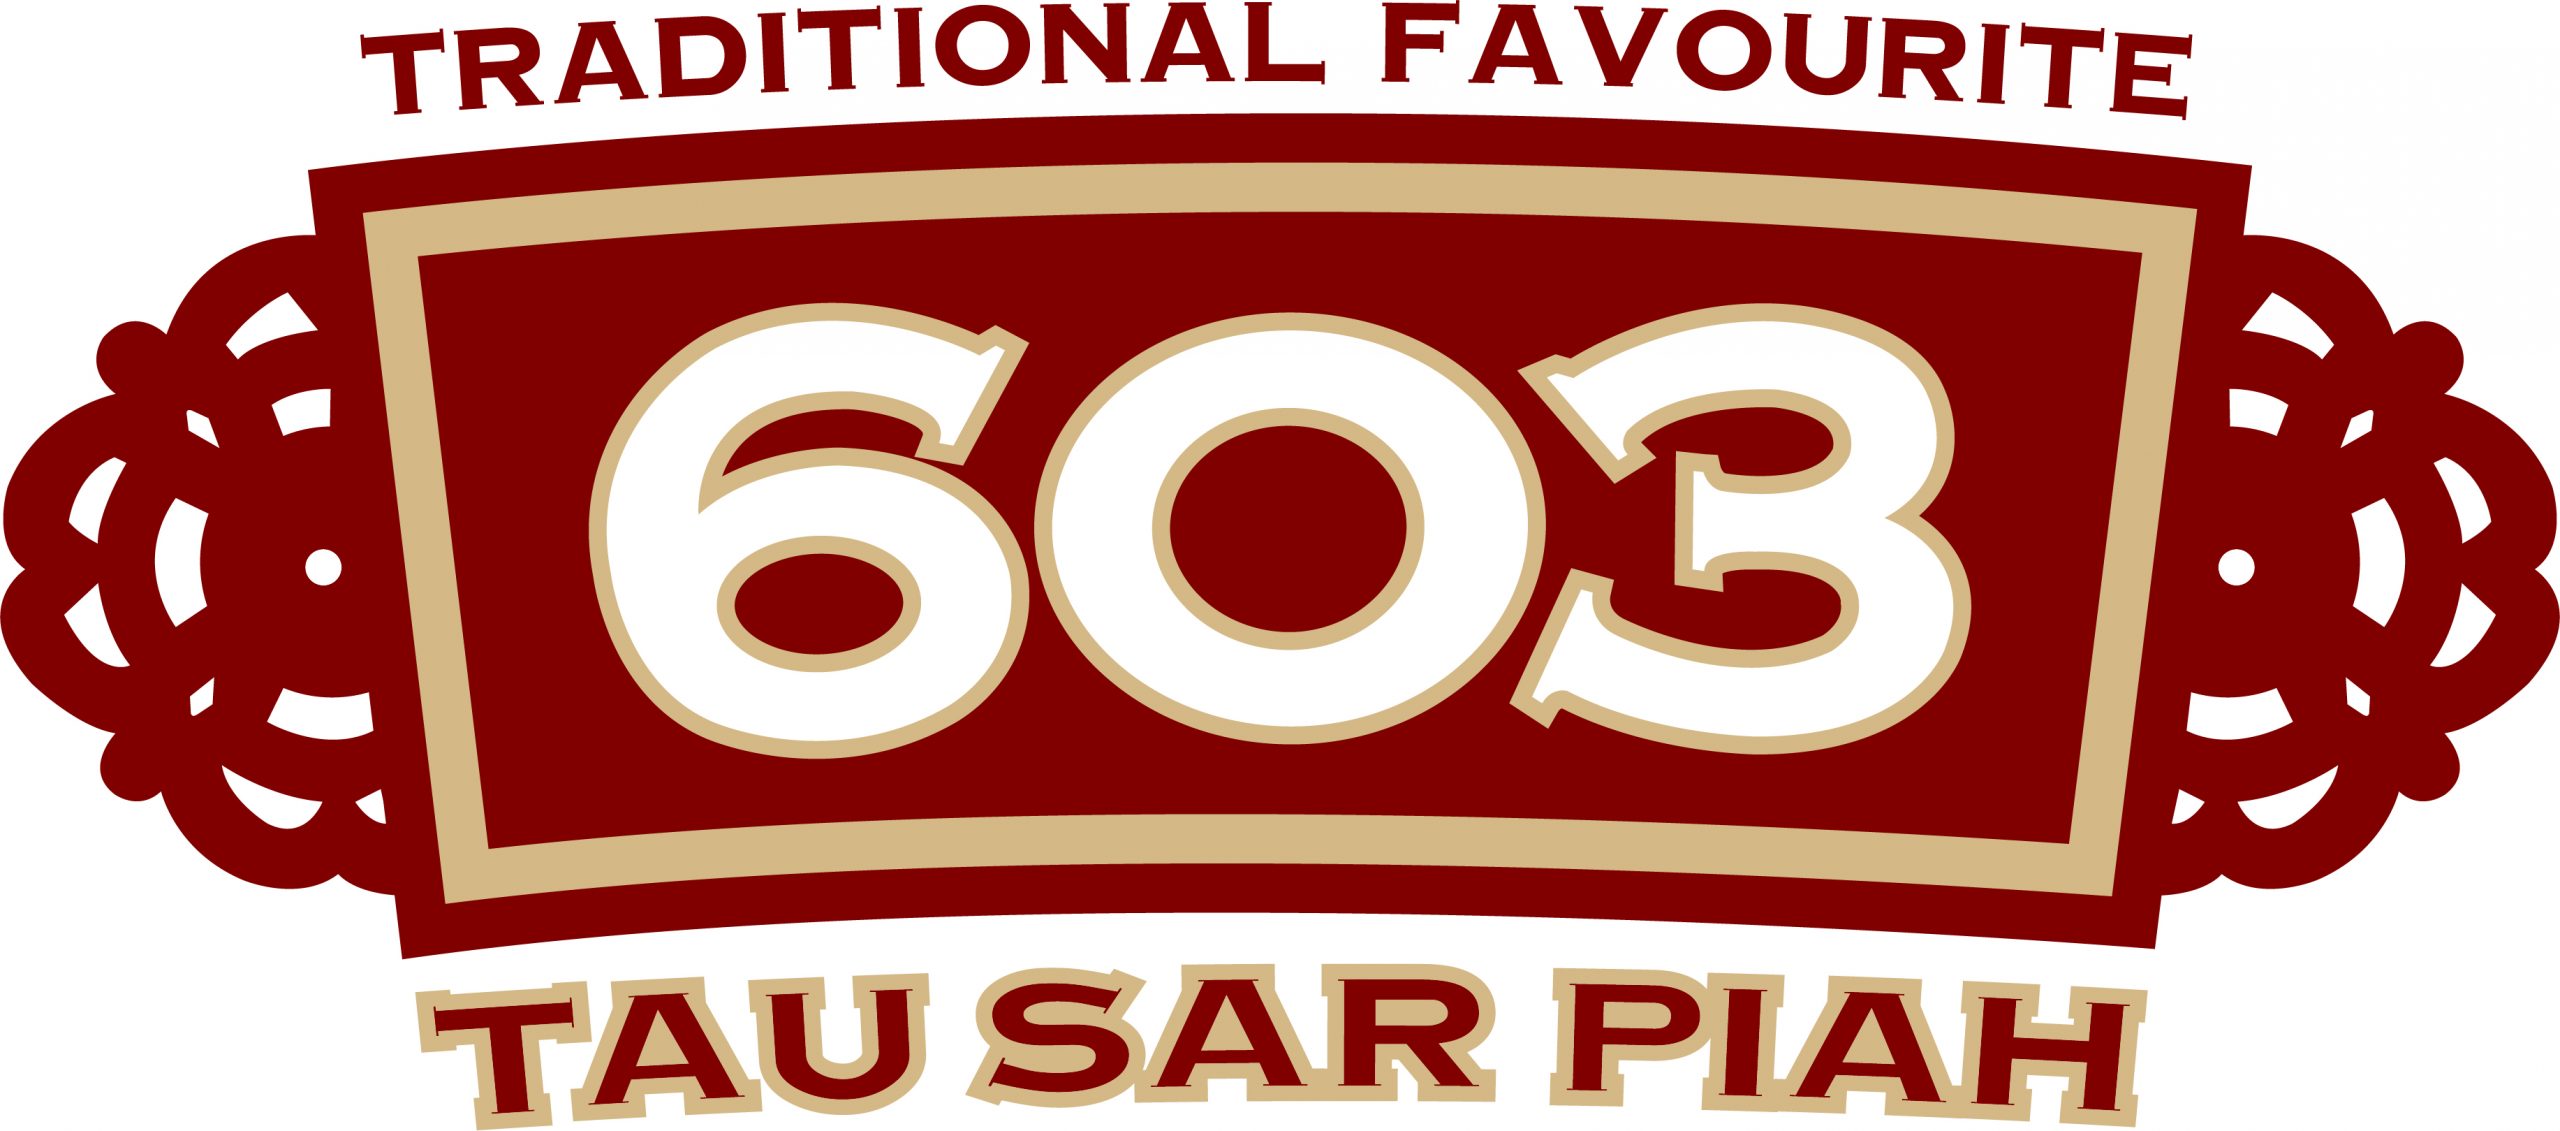 603 Tau Sar Piah